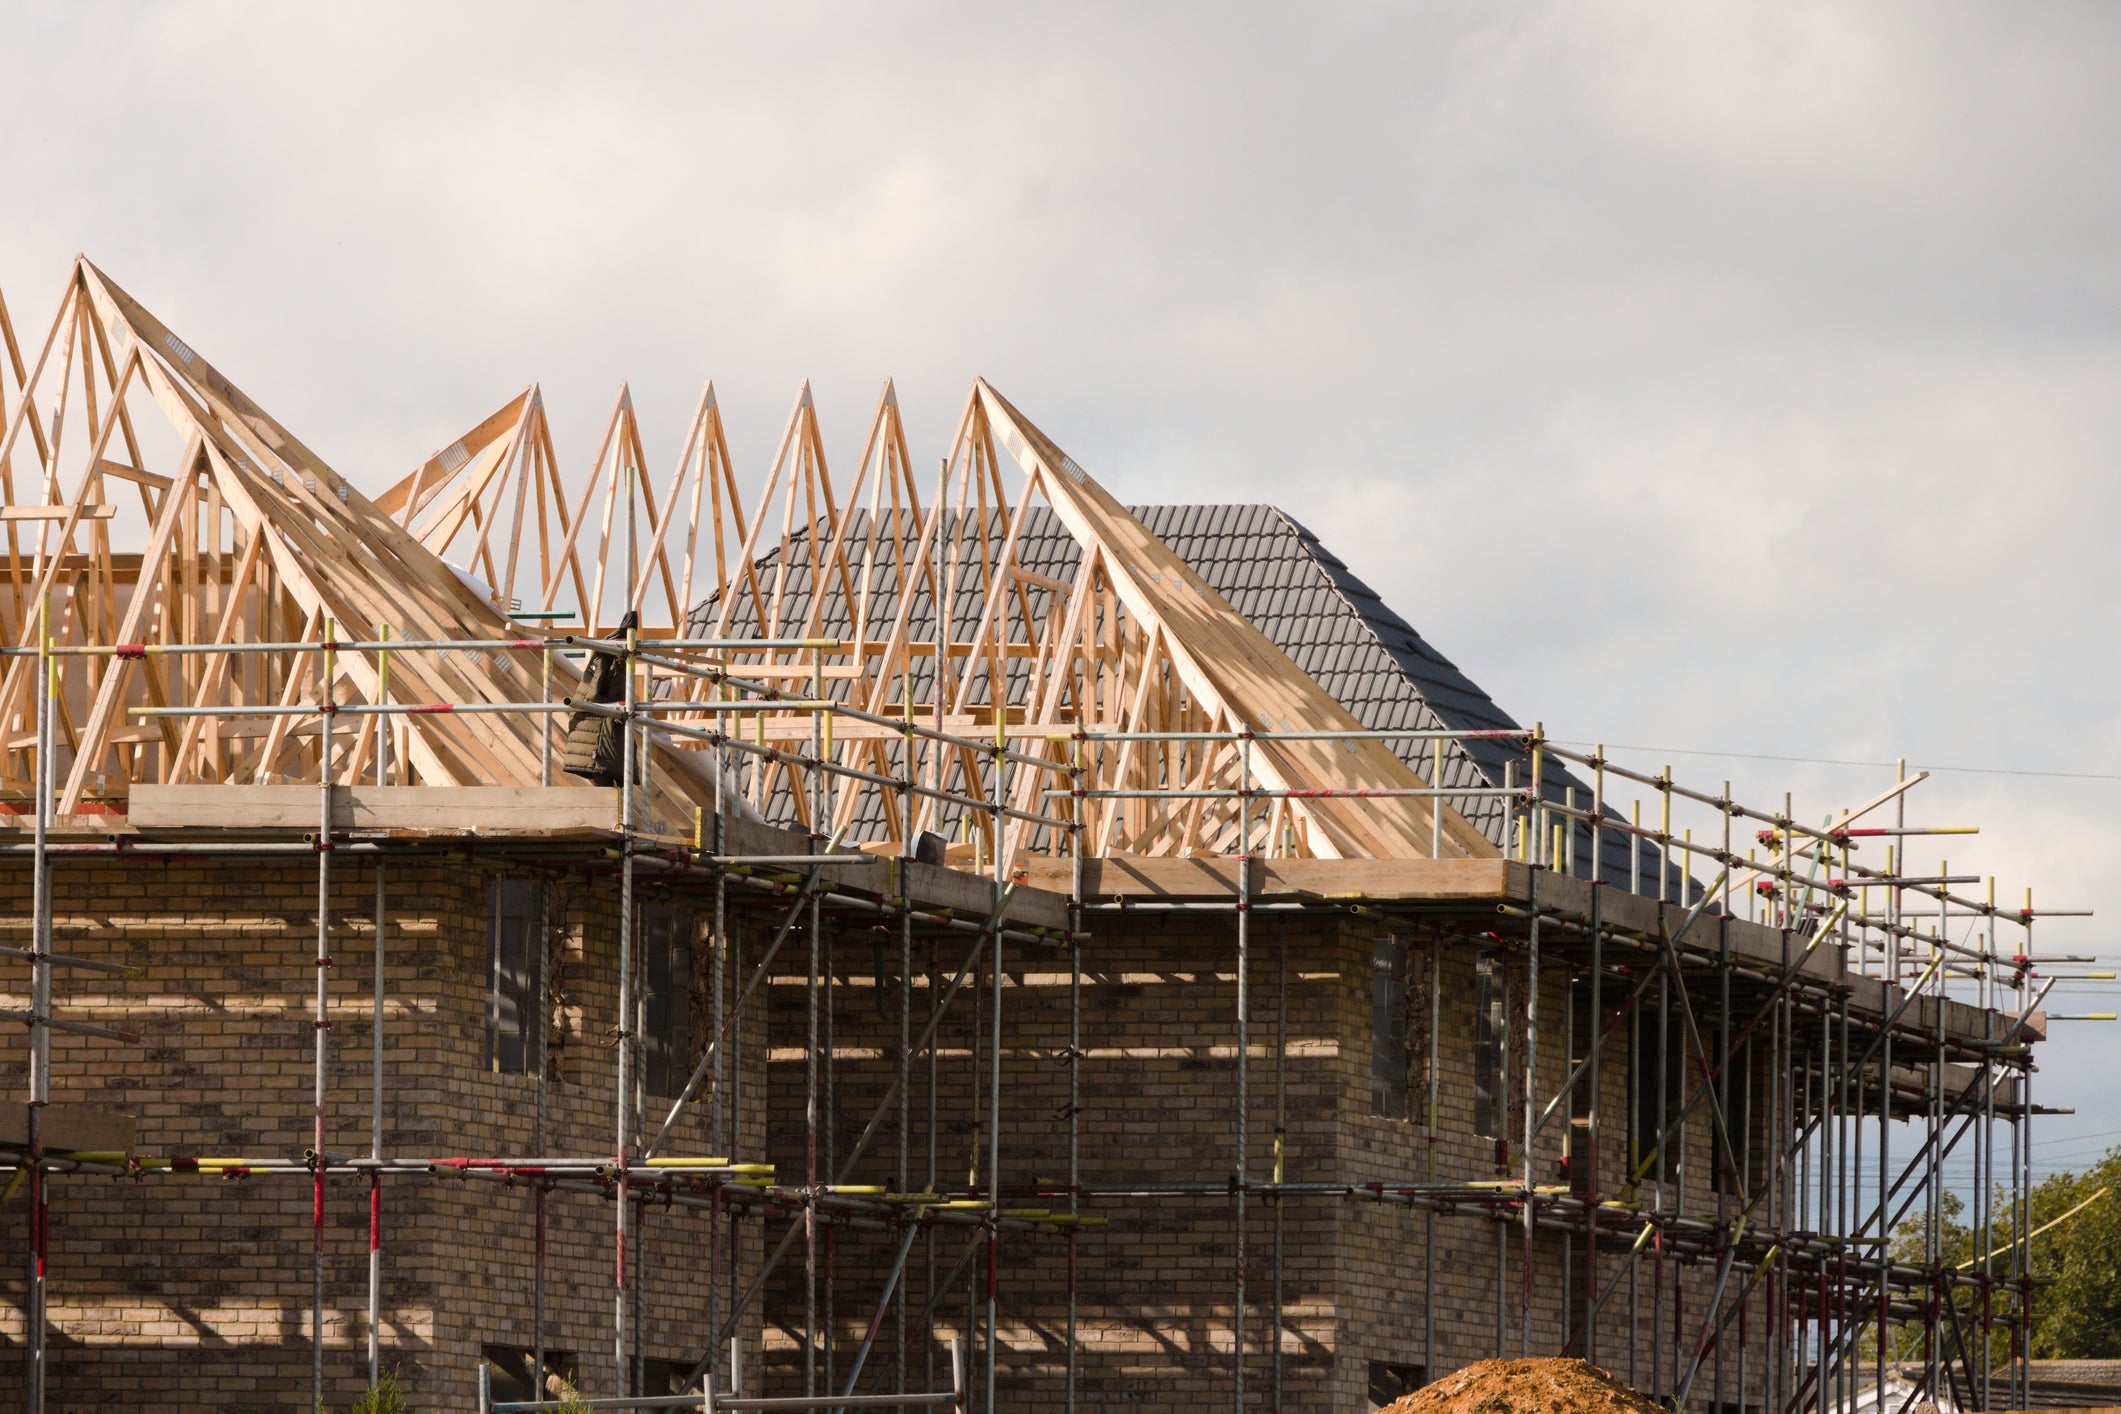 Building sites are facing labour shortages